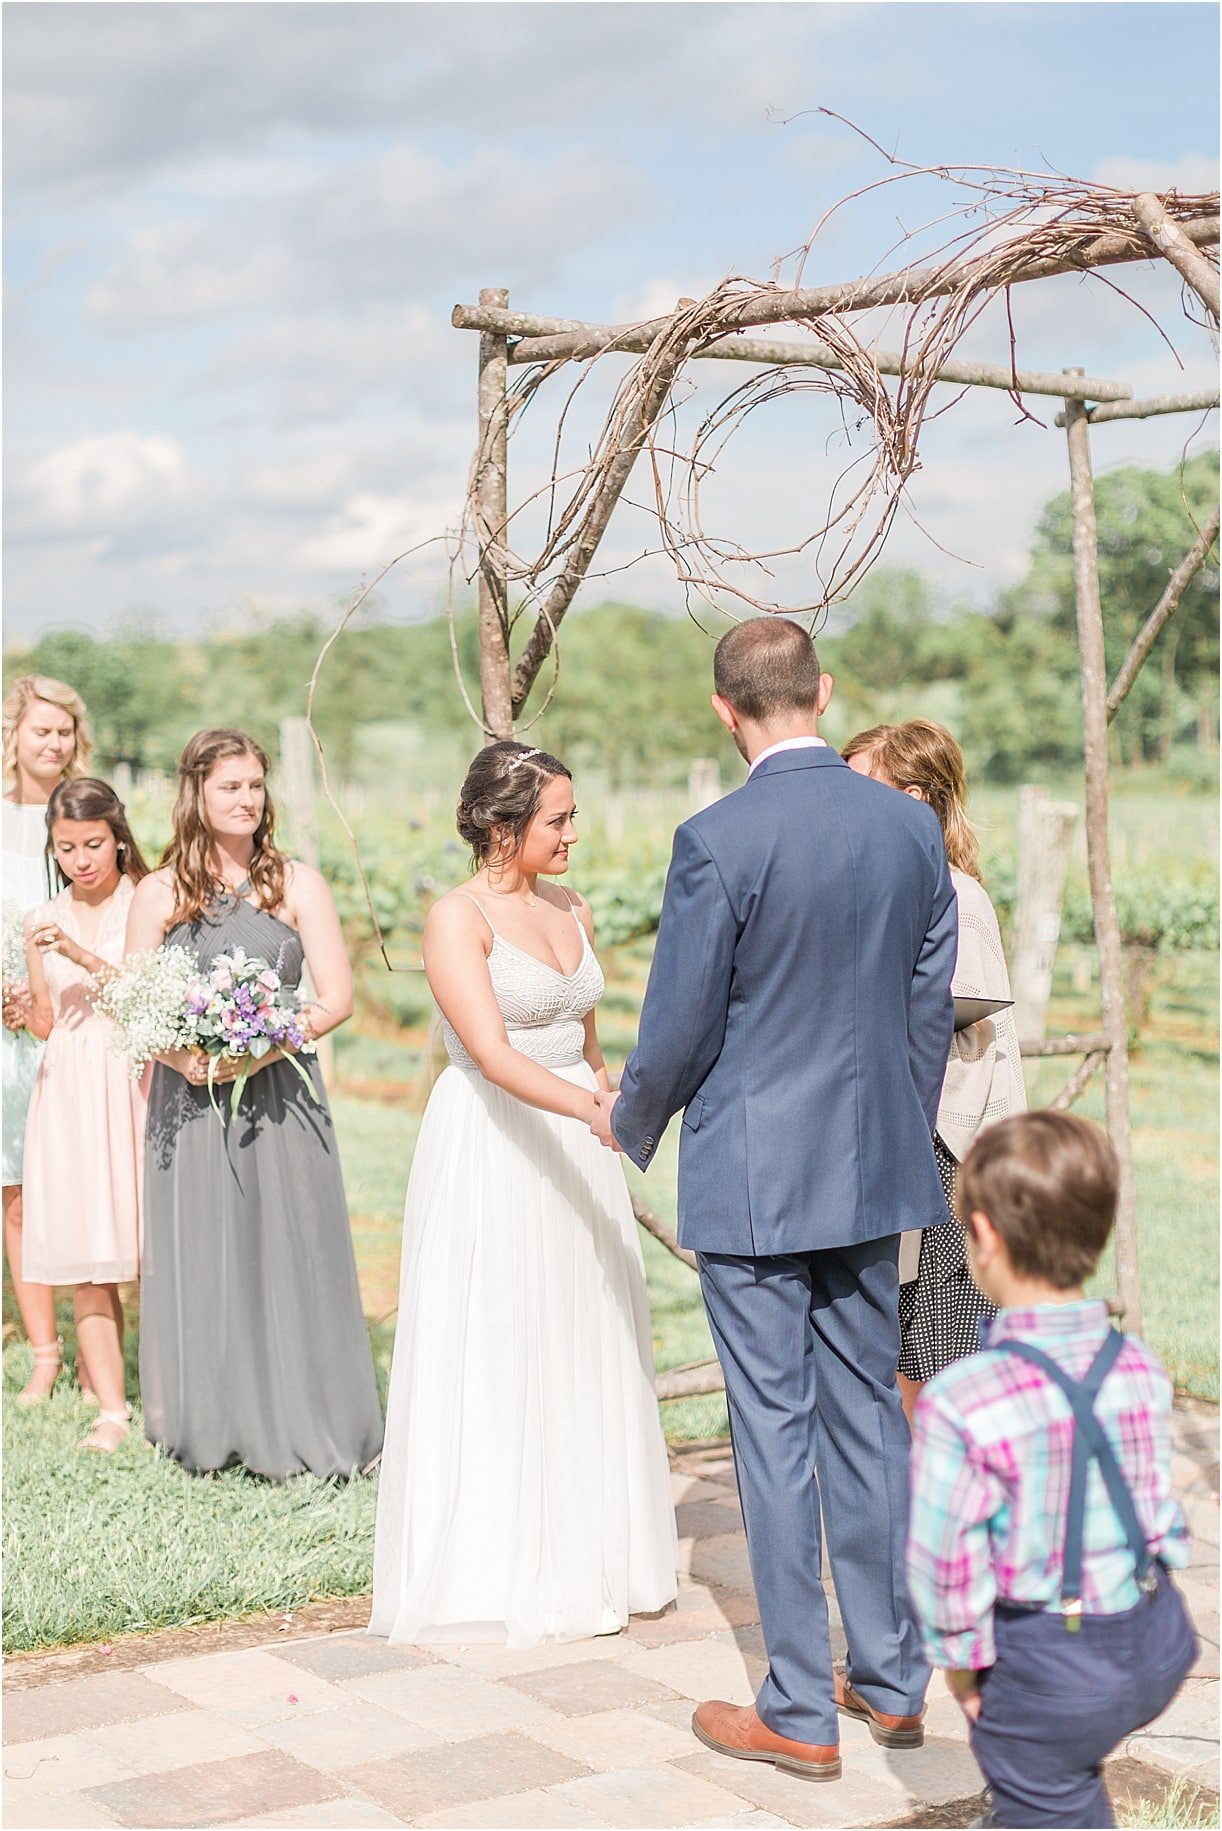 Spring Vineyard Wedding | Hill City Bride Virginia Wedding Blog - Jessica Green Photography - ceremony